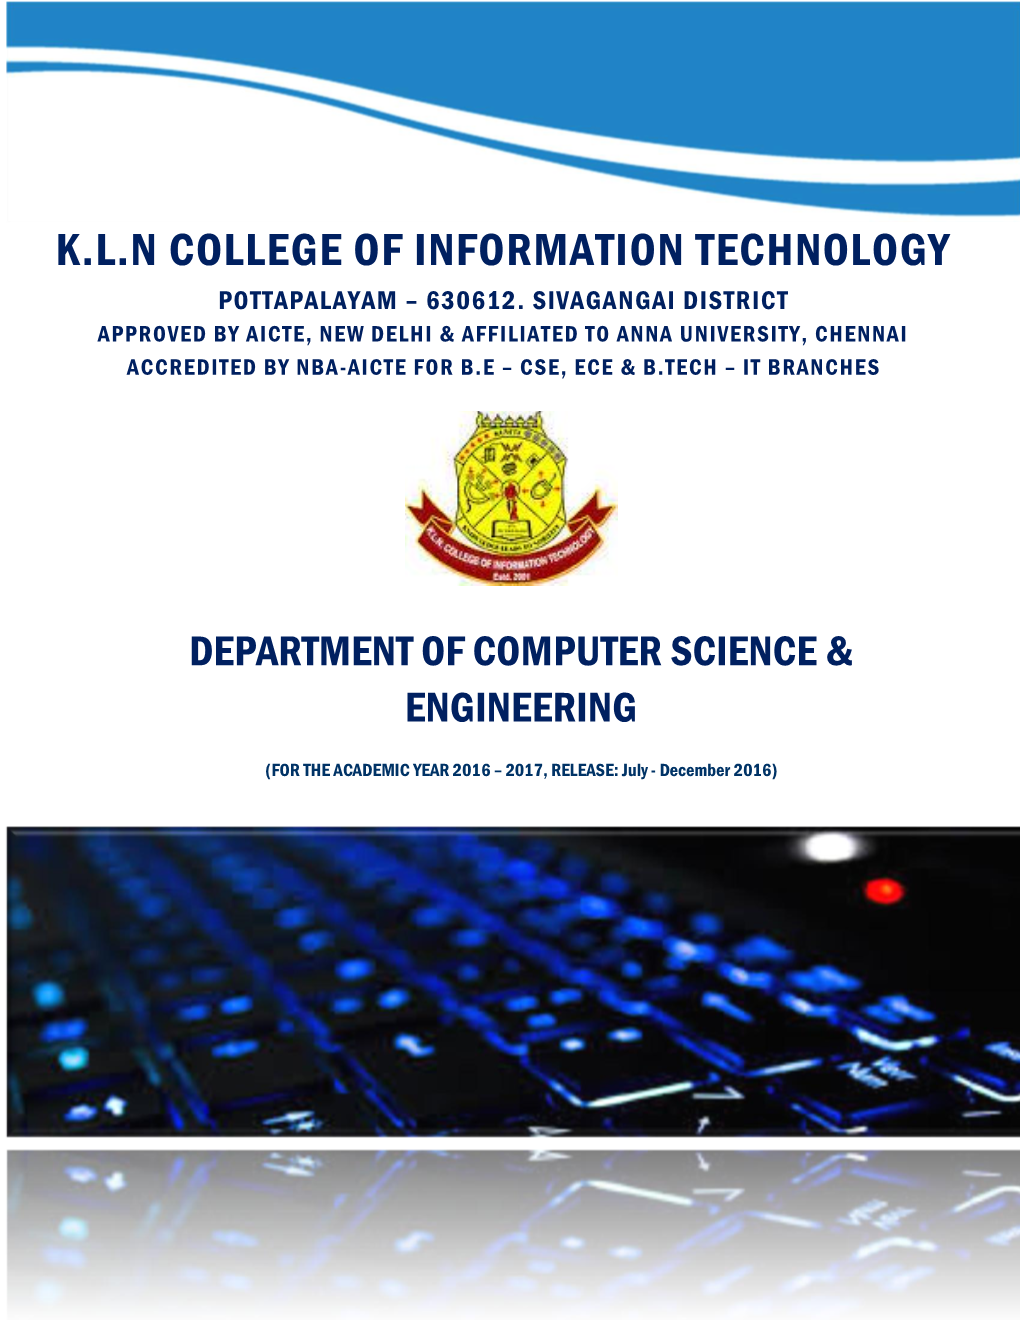 K.L.N College of Information Technology Pottapalayam – 630612